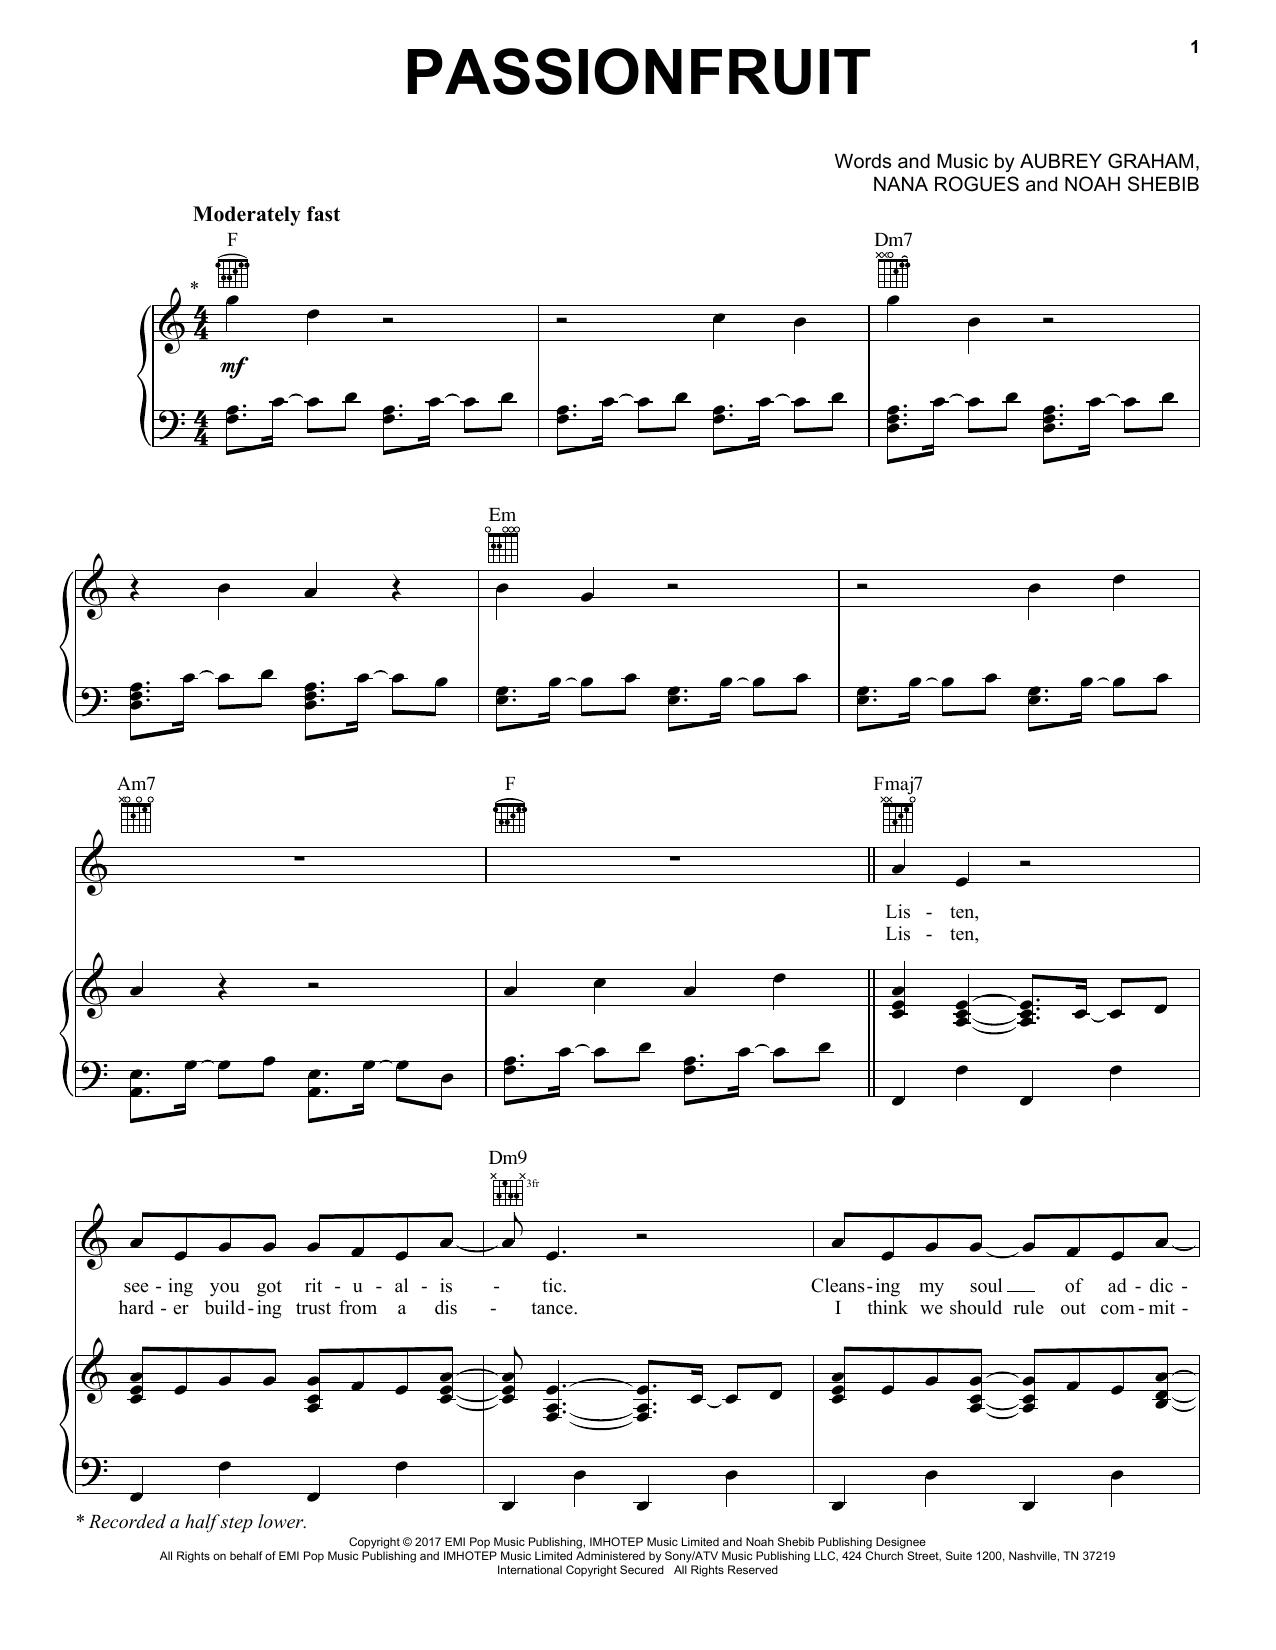 Drake Passionfruit Sheet Music Notes & Chords for Ukulele - Download or Print PDF